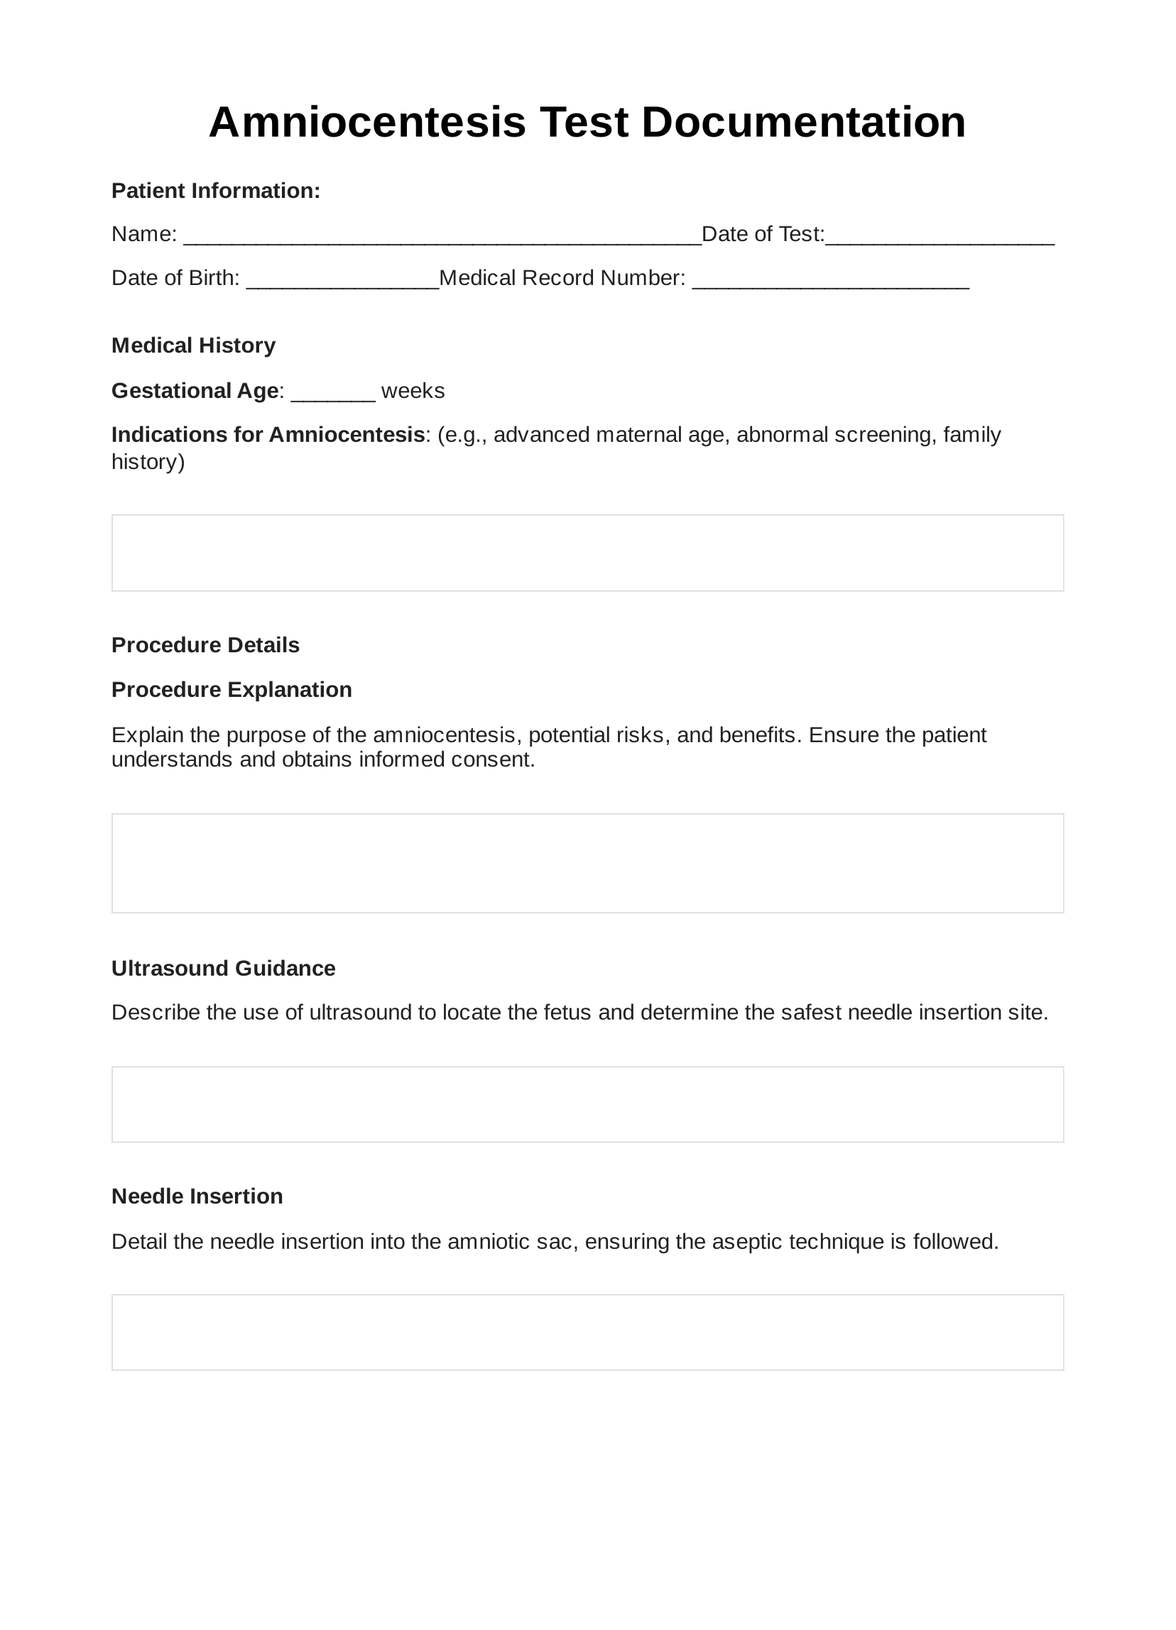 Amniocentesis PDF Example